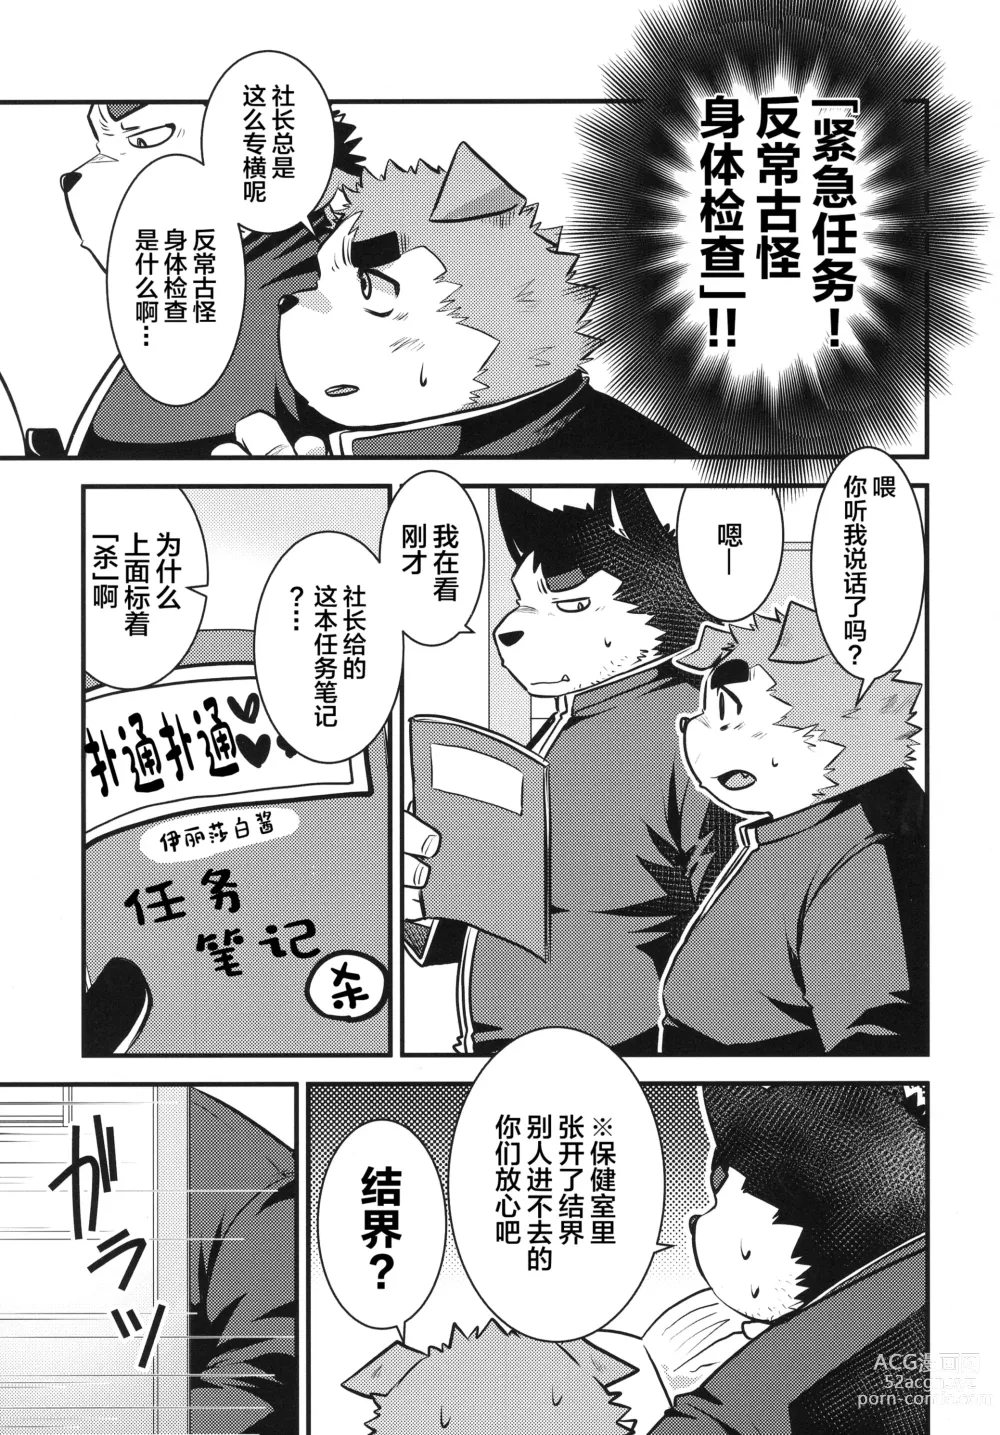 Page 9 of doujinshi Eccentric Shintai Kensa